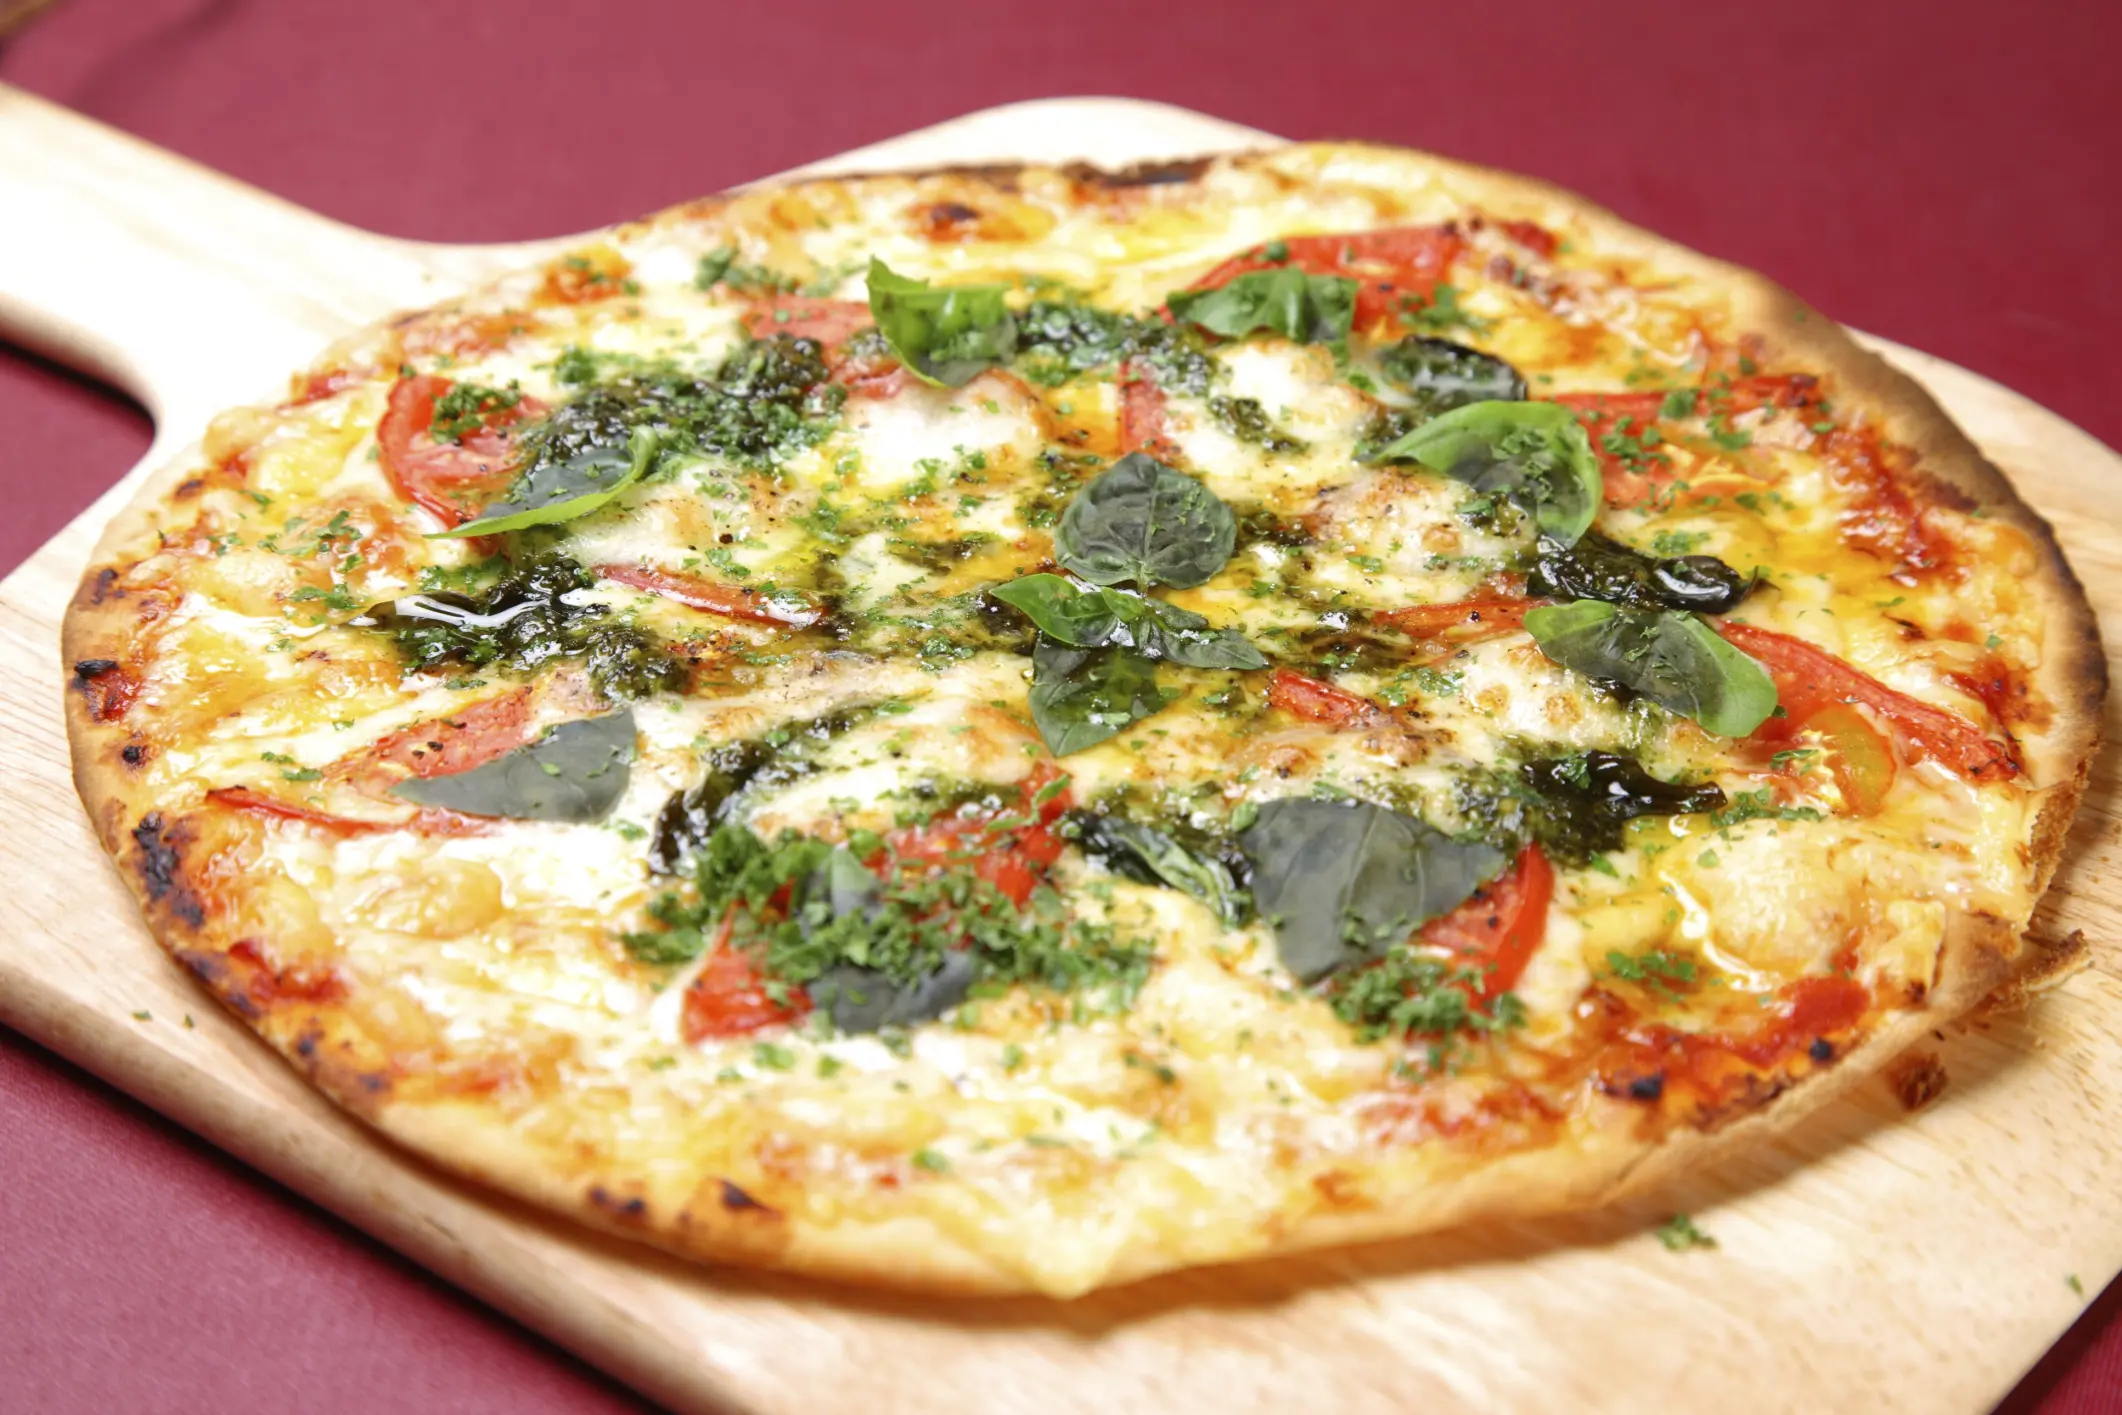 calories in margarita pizza - Is margarita pizza the healthiest pizza